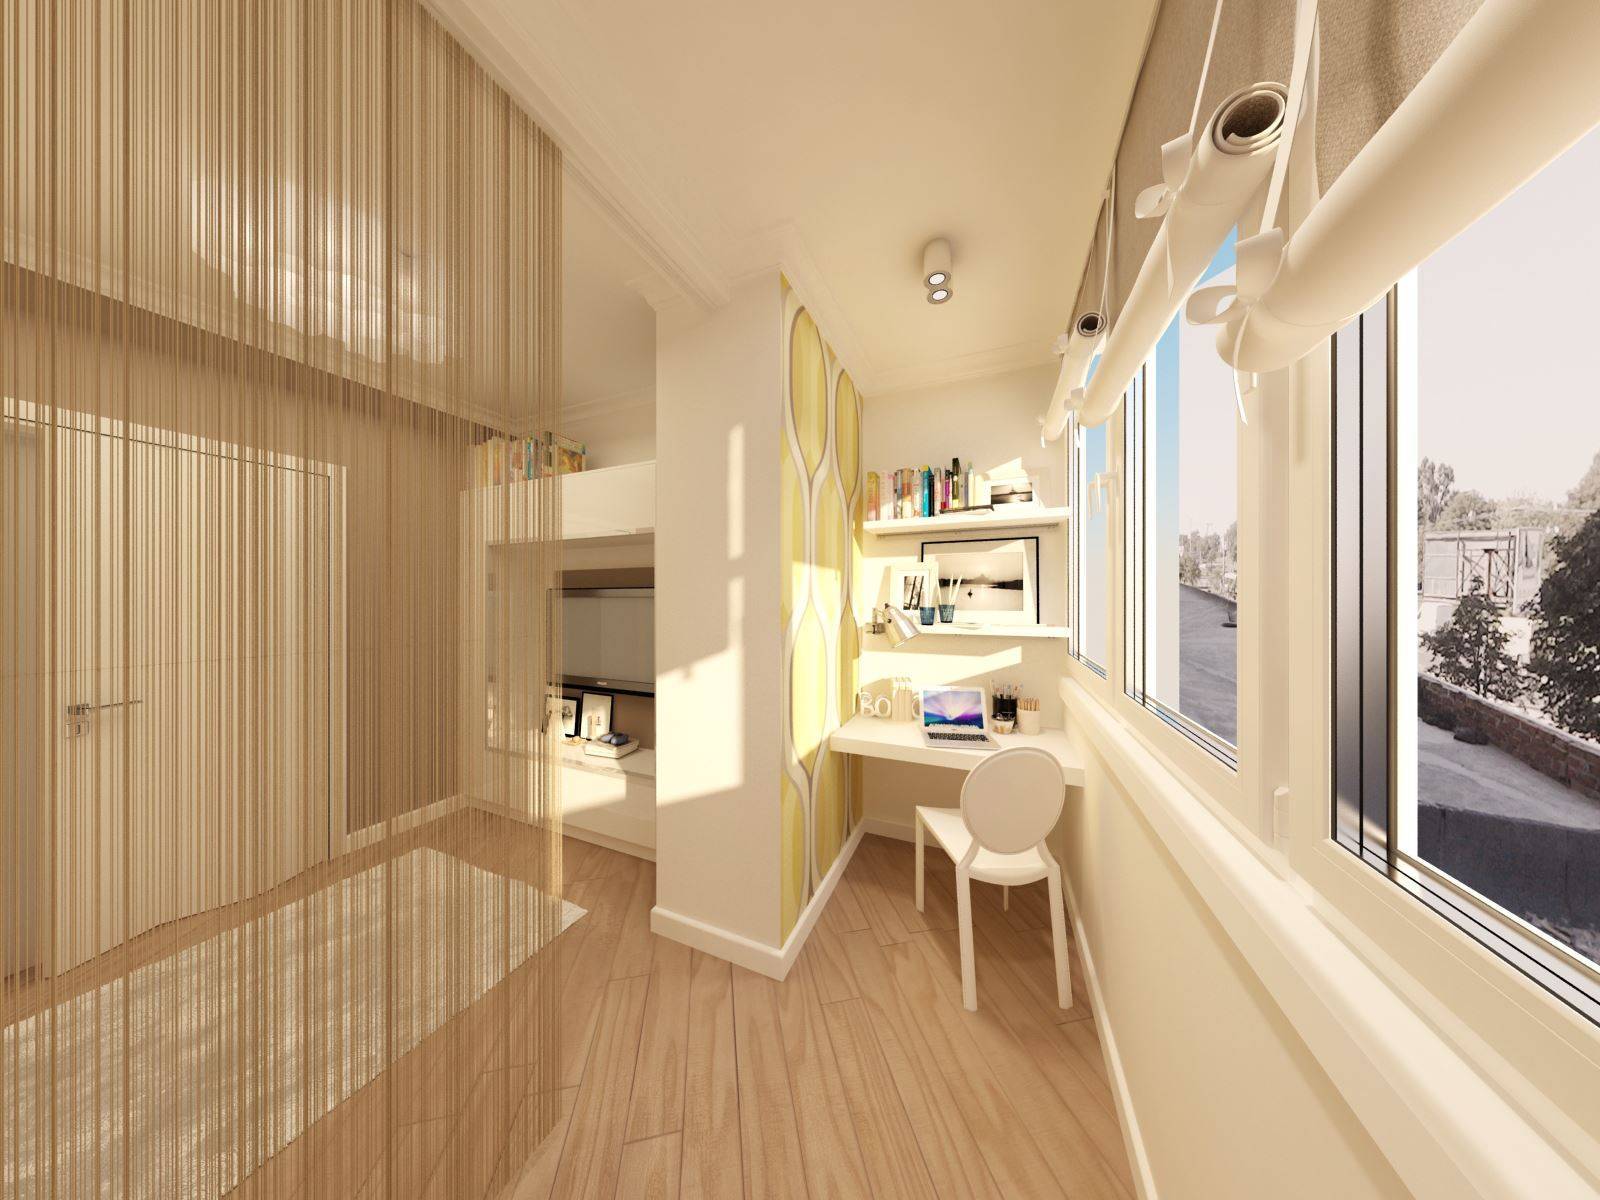 Дизайн объединение балкона с комнатой фото дизайн